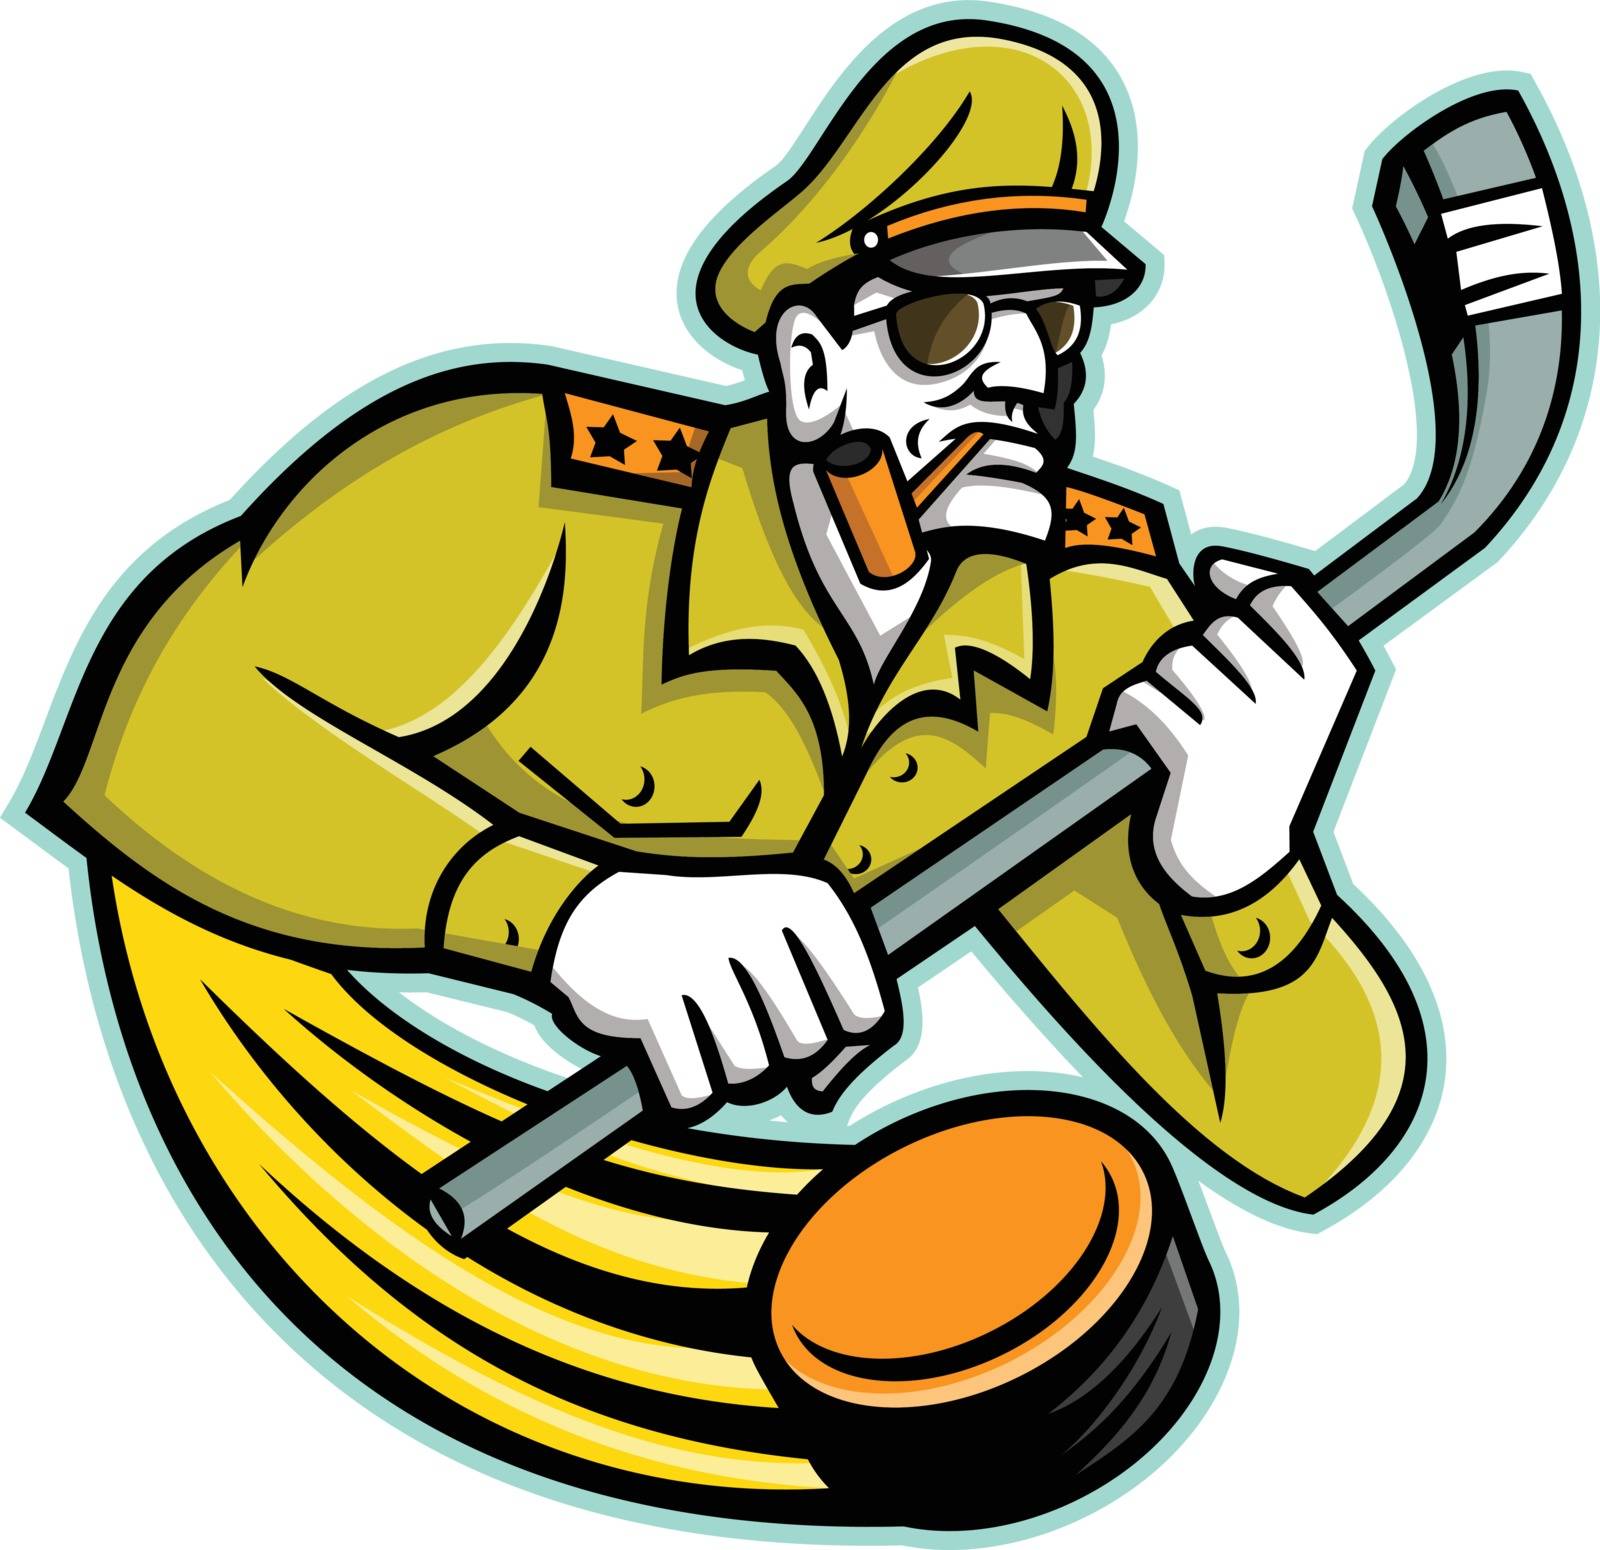 Army General Ice Hockey Sports Mascot by patrimonio